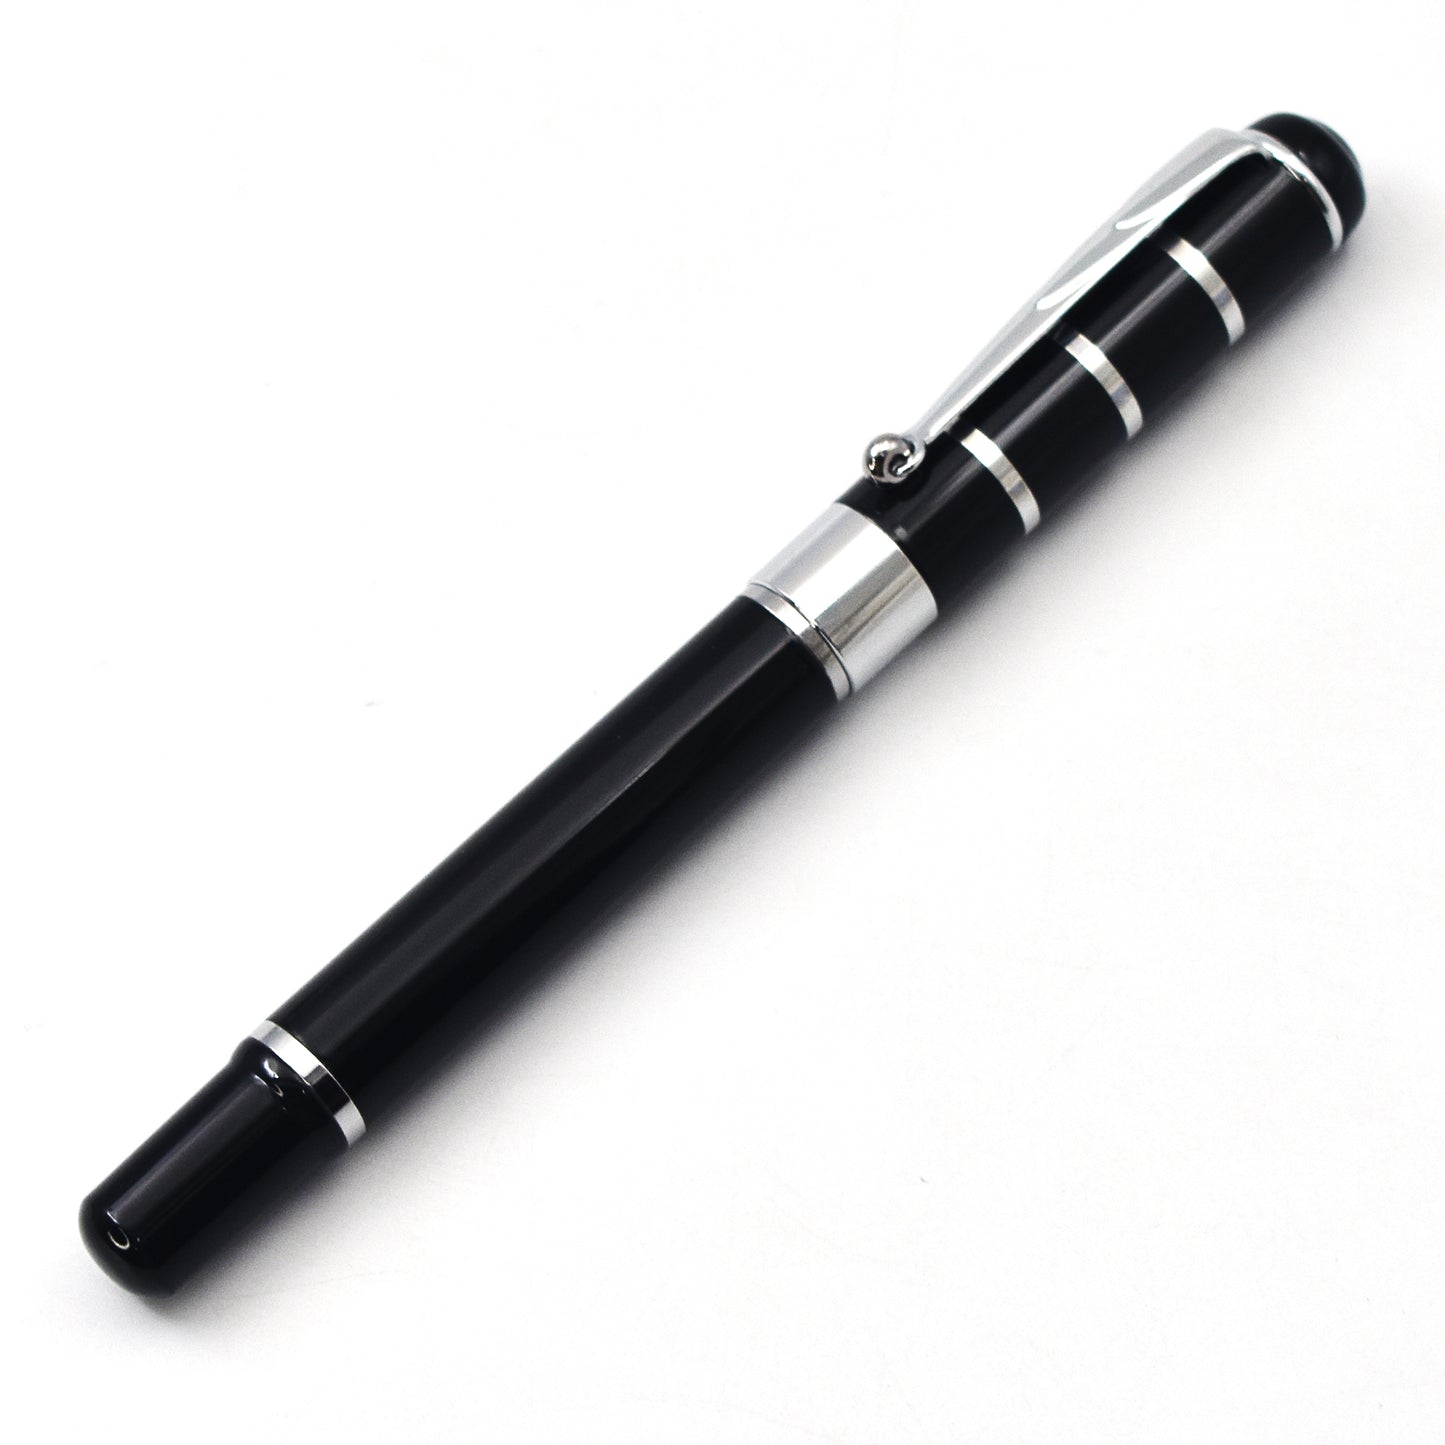 Premium Quality Luxury Imported Ink Pen | Ink Pen 999 + Hero ink 50ml